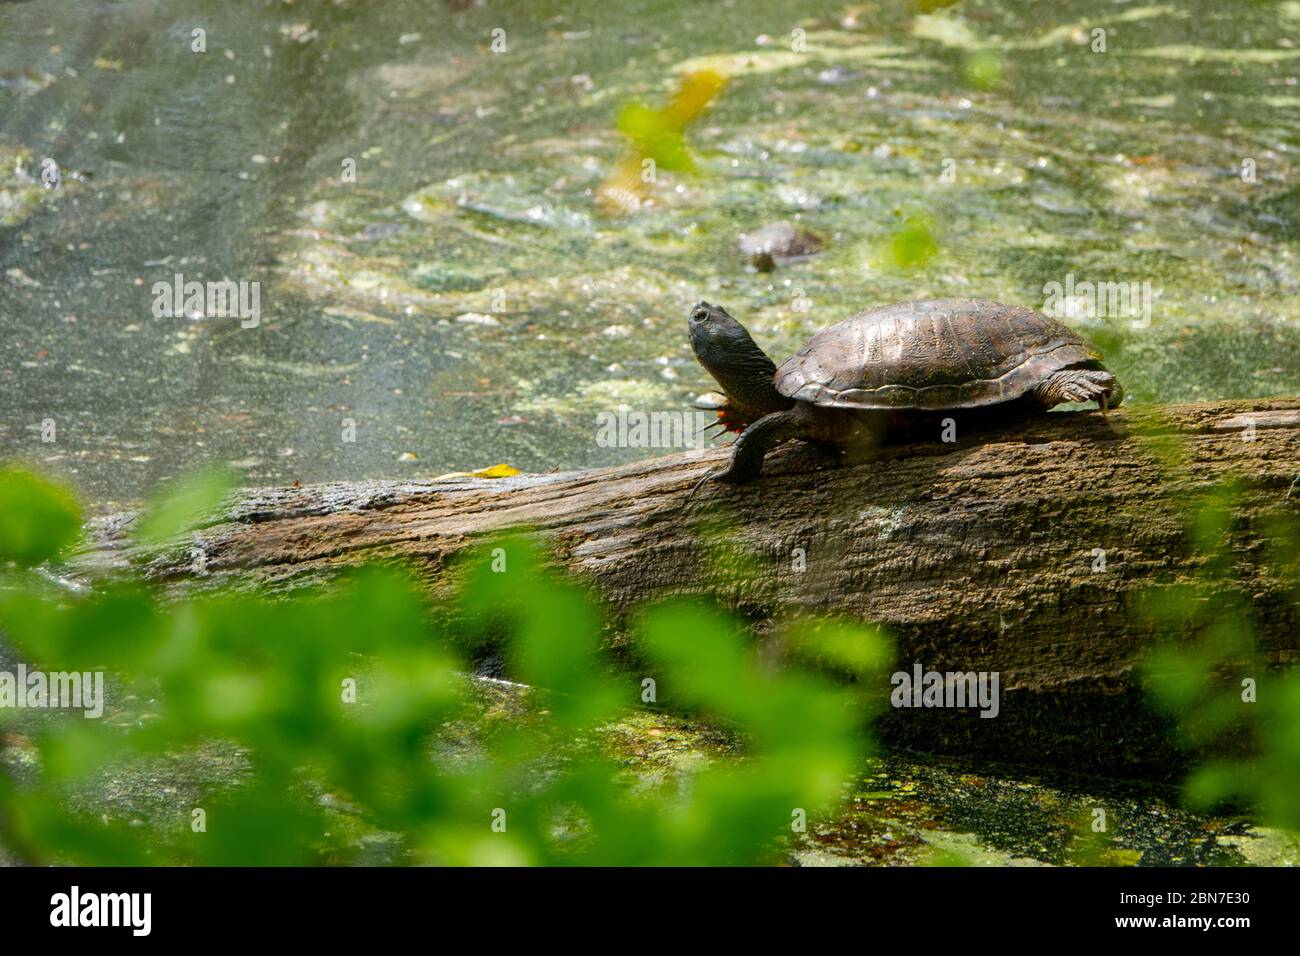 USA Maryland Poolesville McKee Beshers Wildlife Management Area tartarughe su un ceppo coperto di anatra Foto Stock